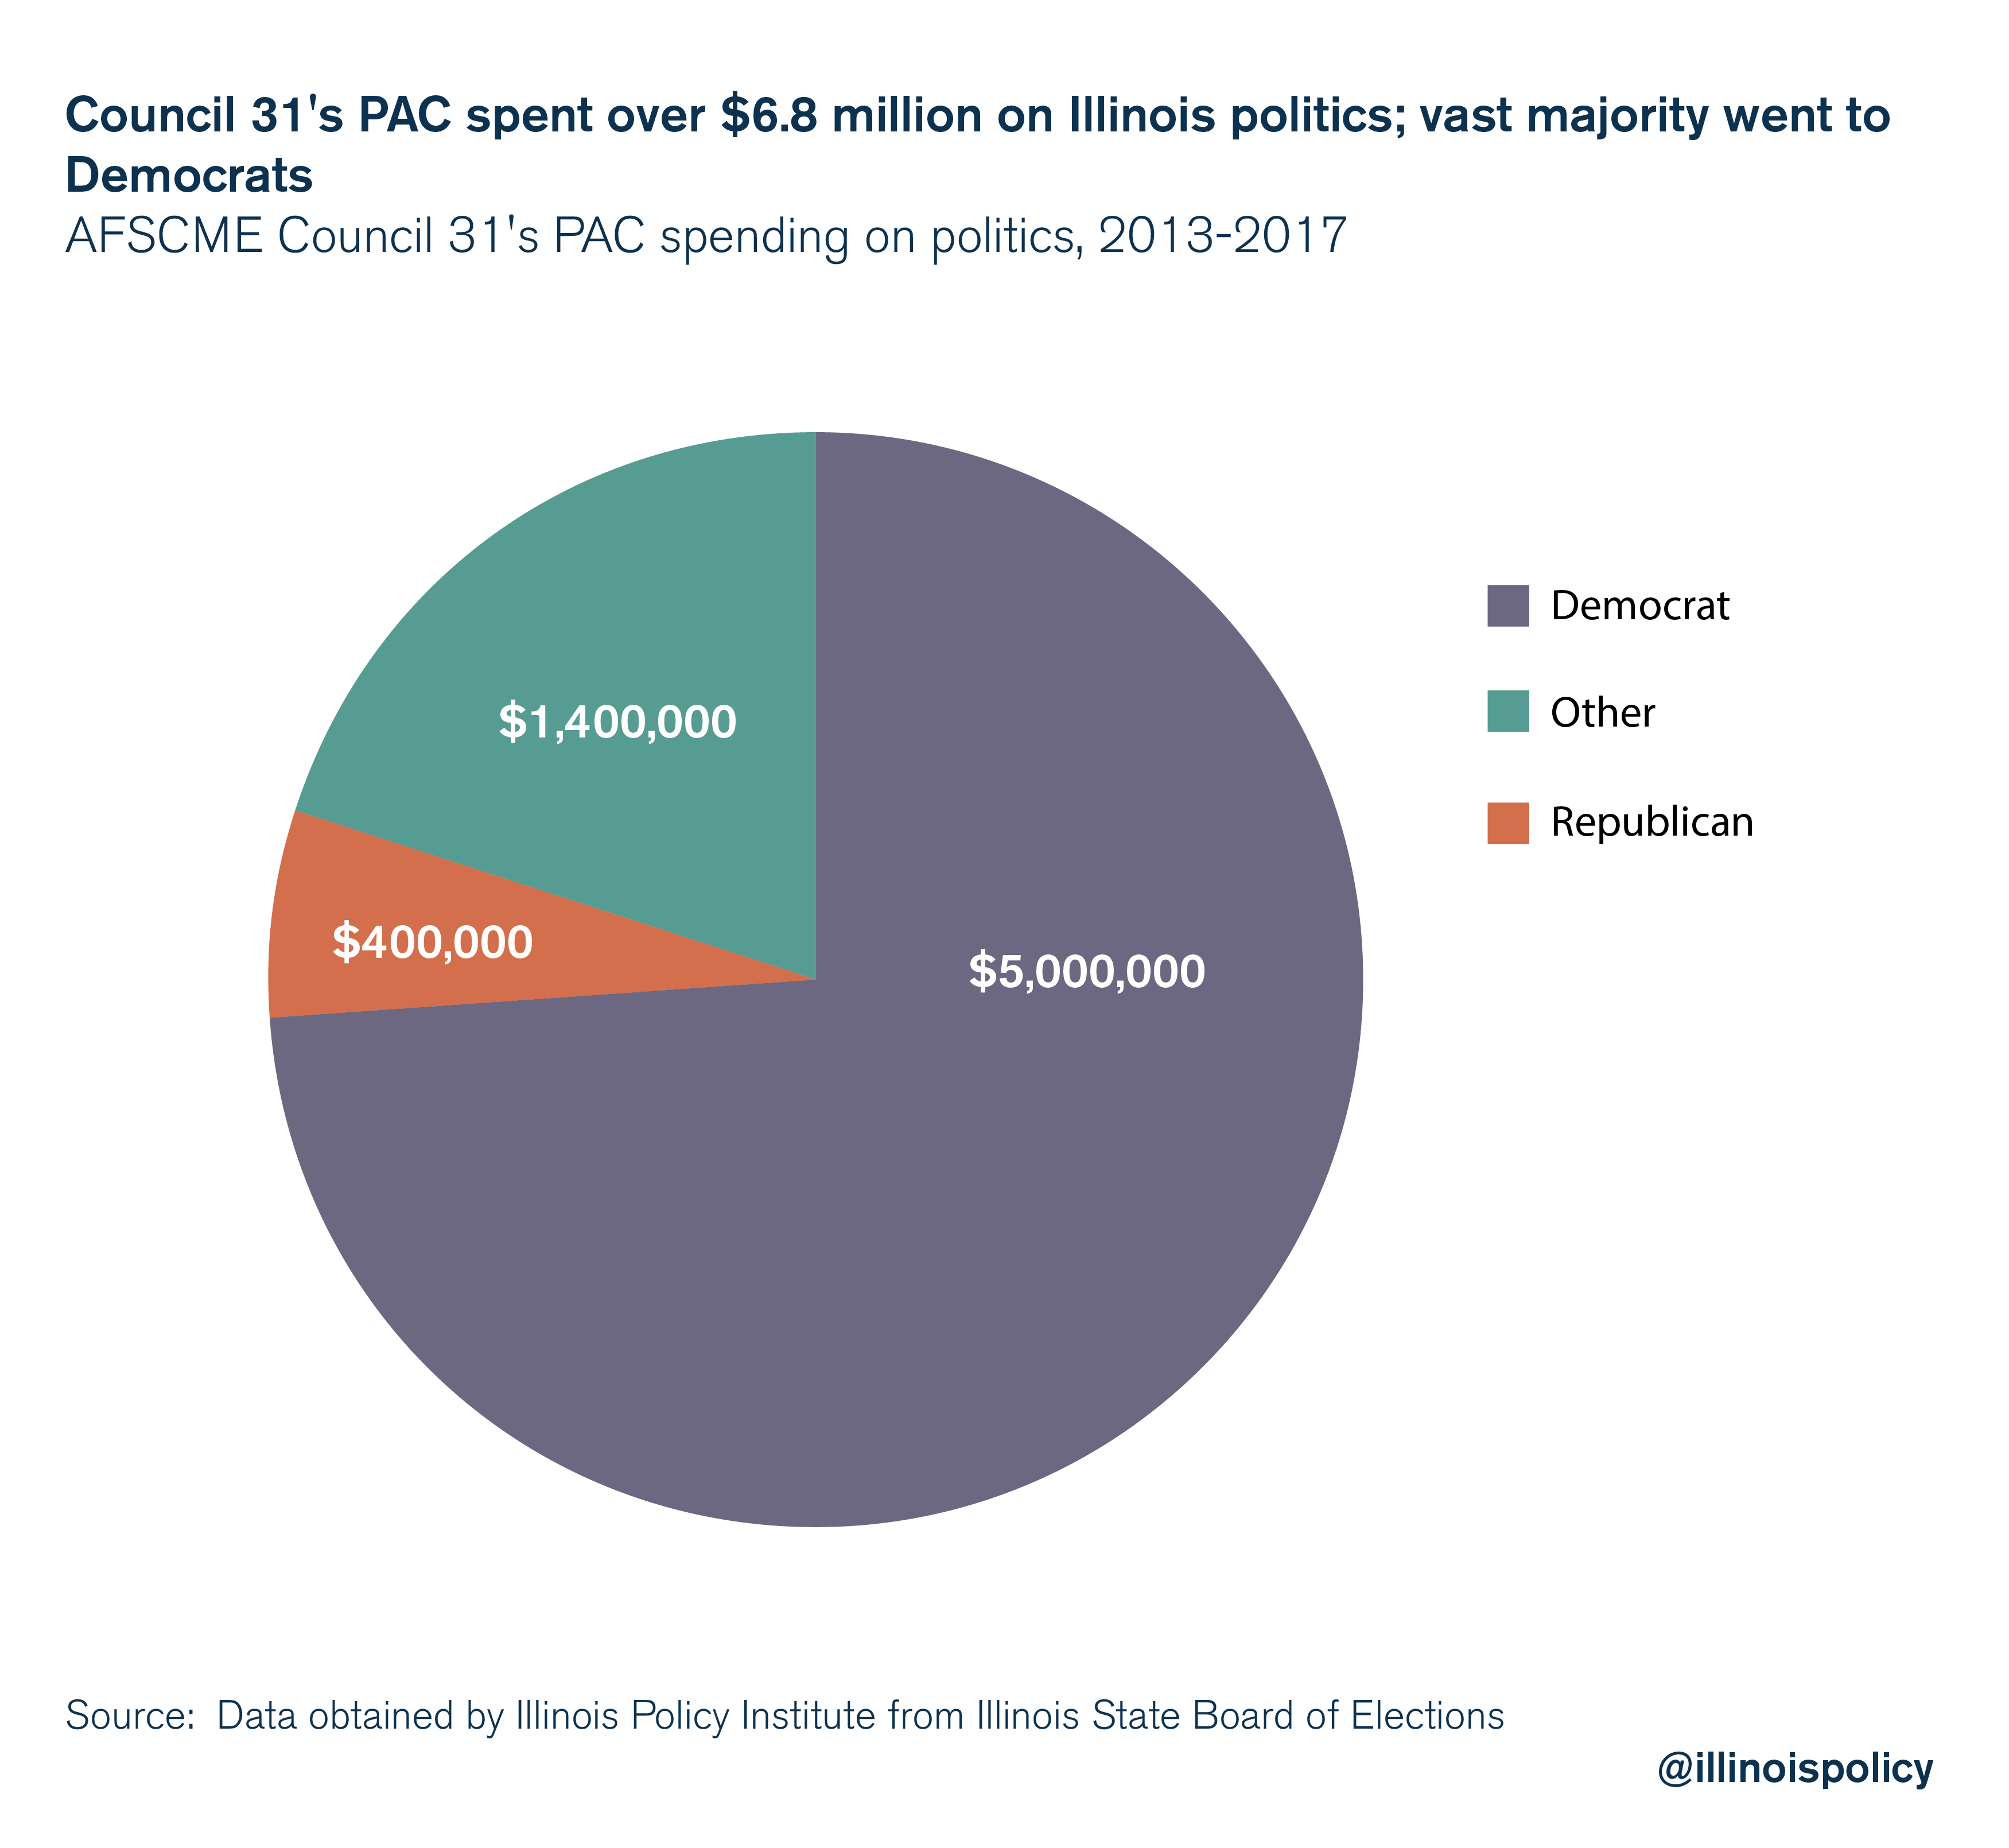 Council 31's PAC spent over $6.8 million on Illinois politics; vast majority went to Democrats